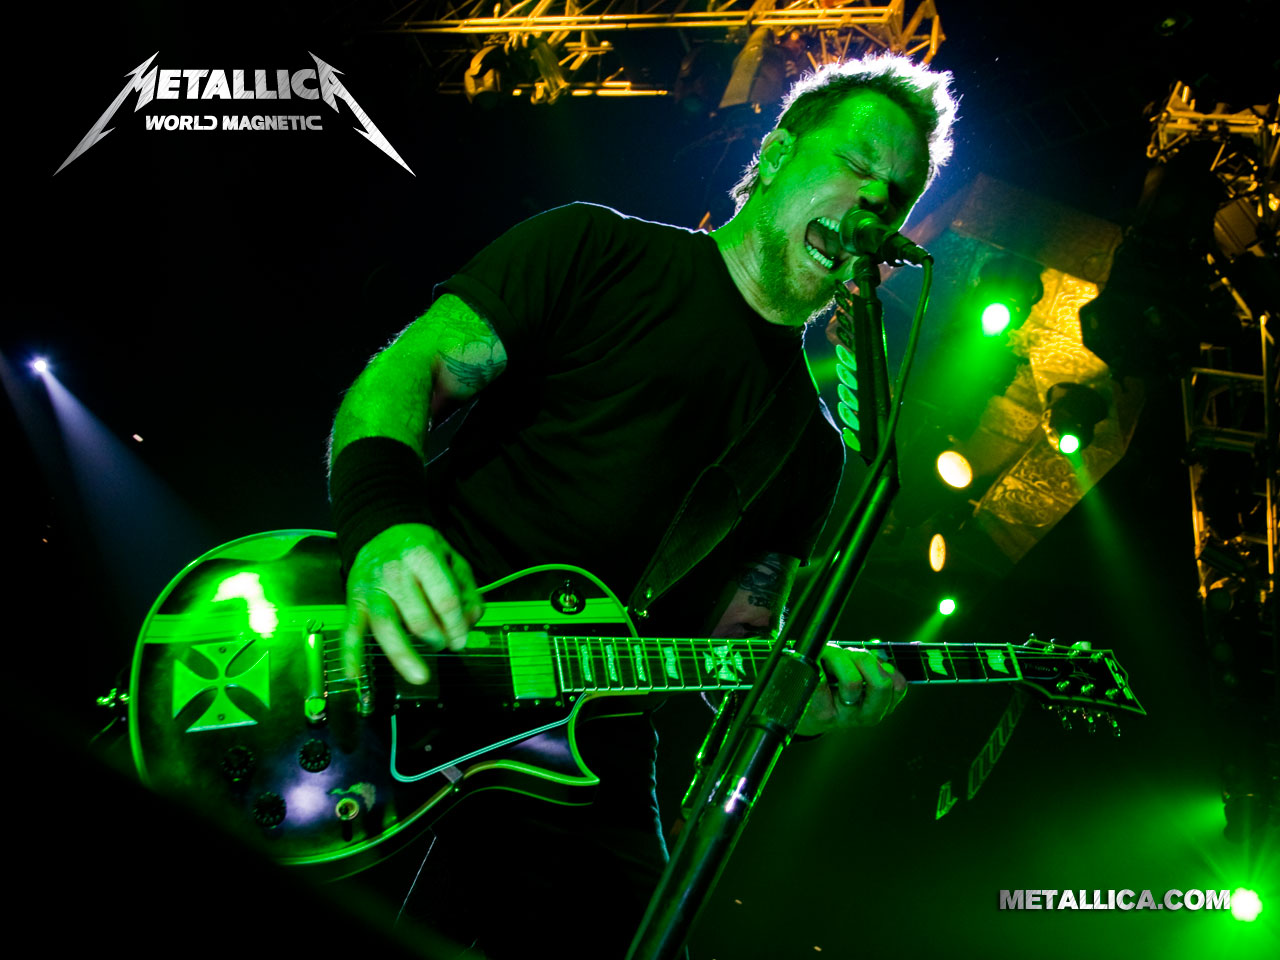 Metallica Wallpaper HD 1080p Image